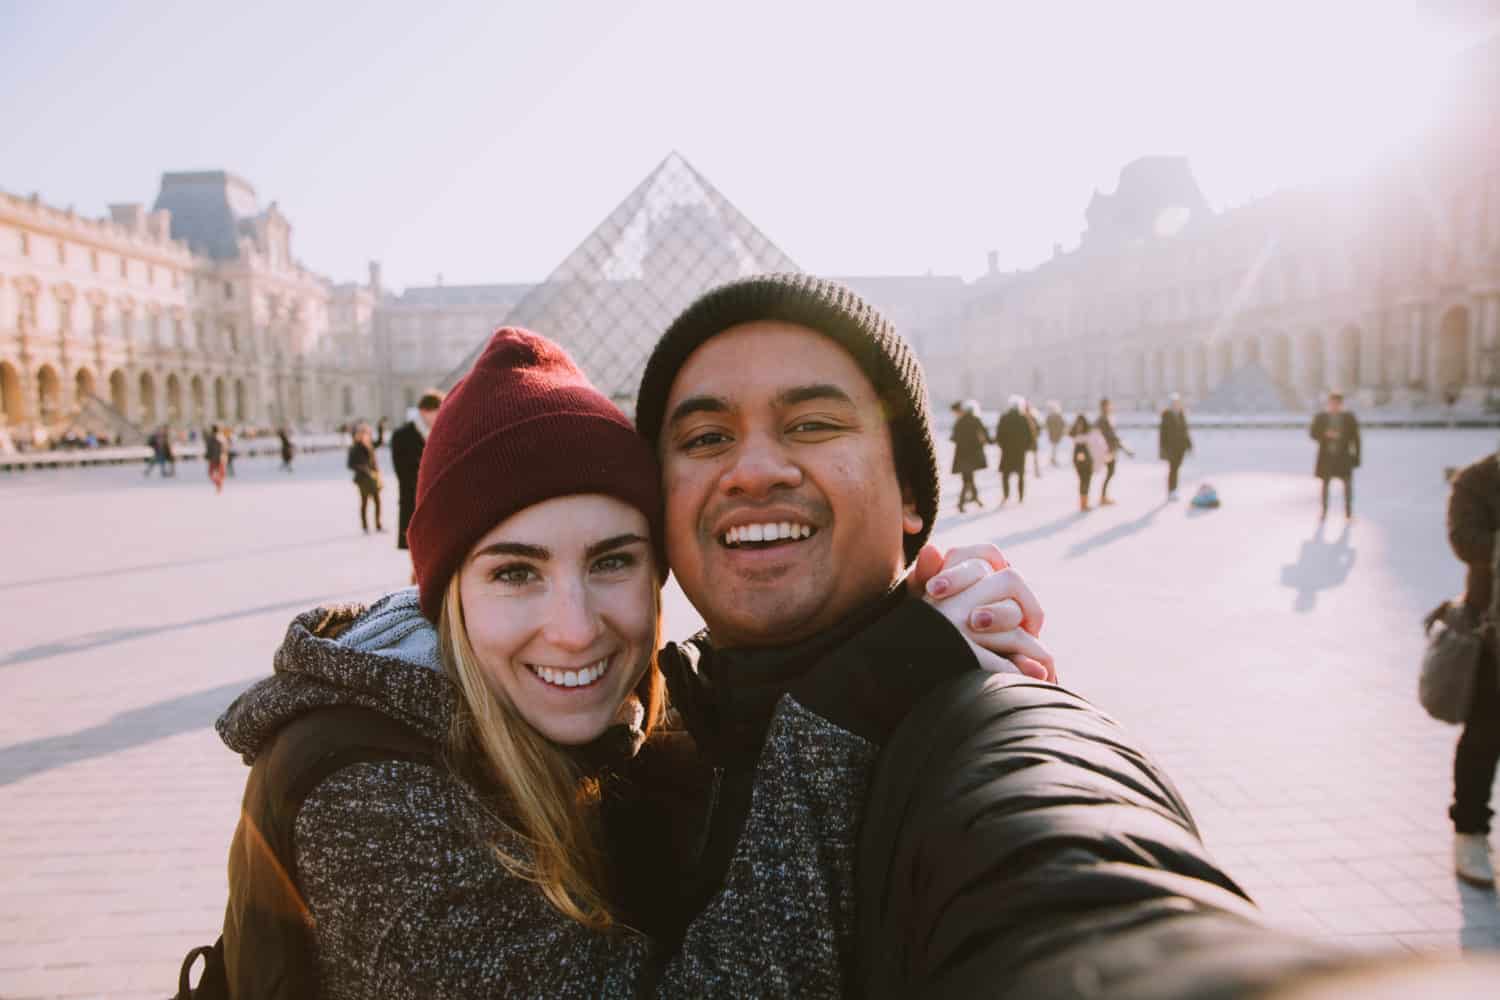 10 Best Instagram Spots In Paris - TheMandagies.com